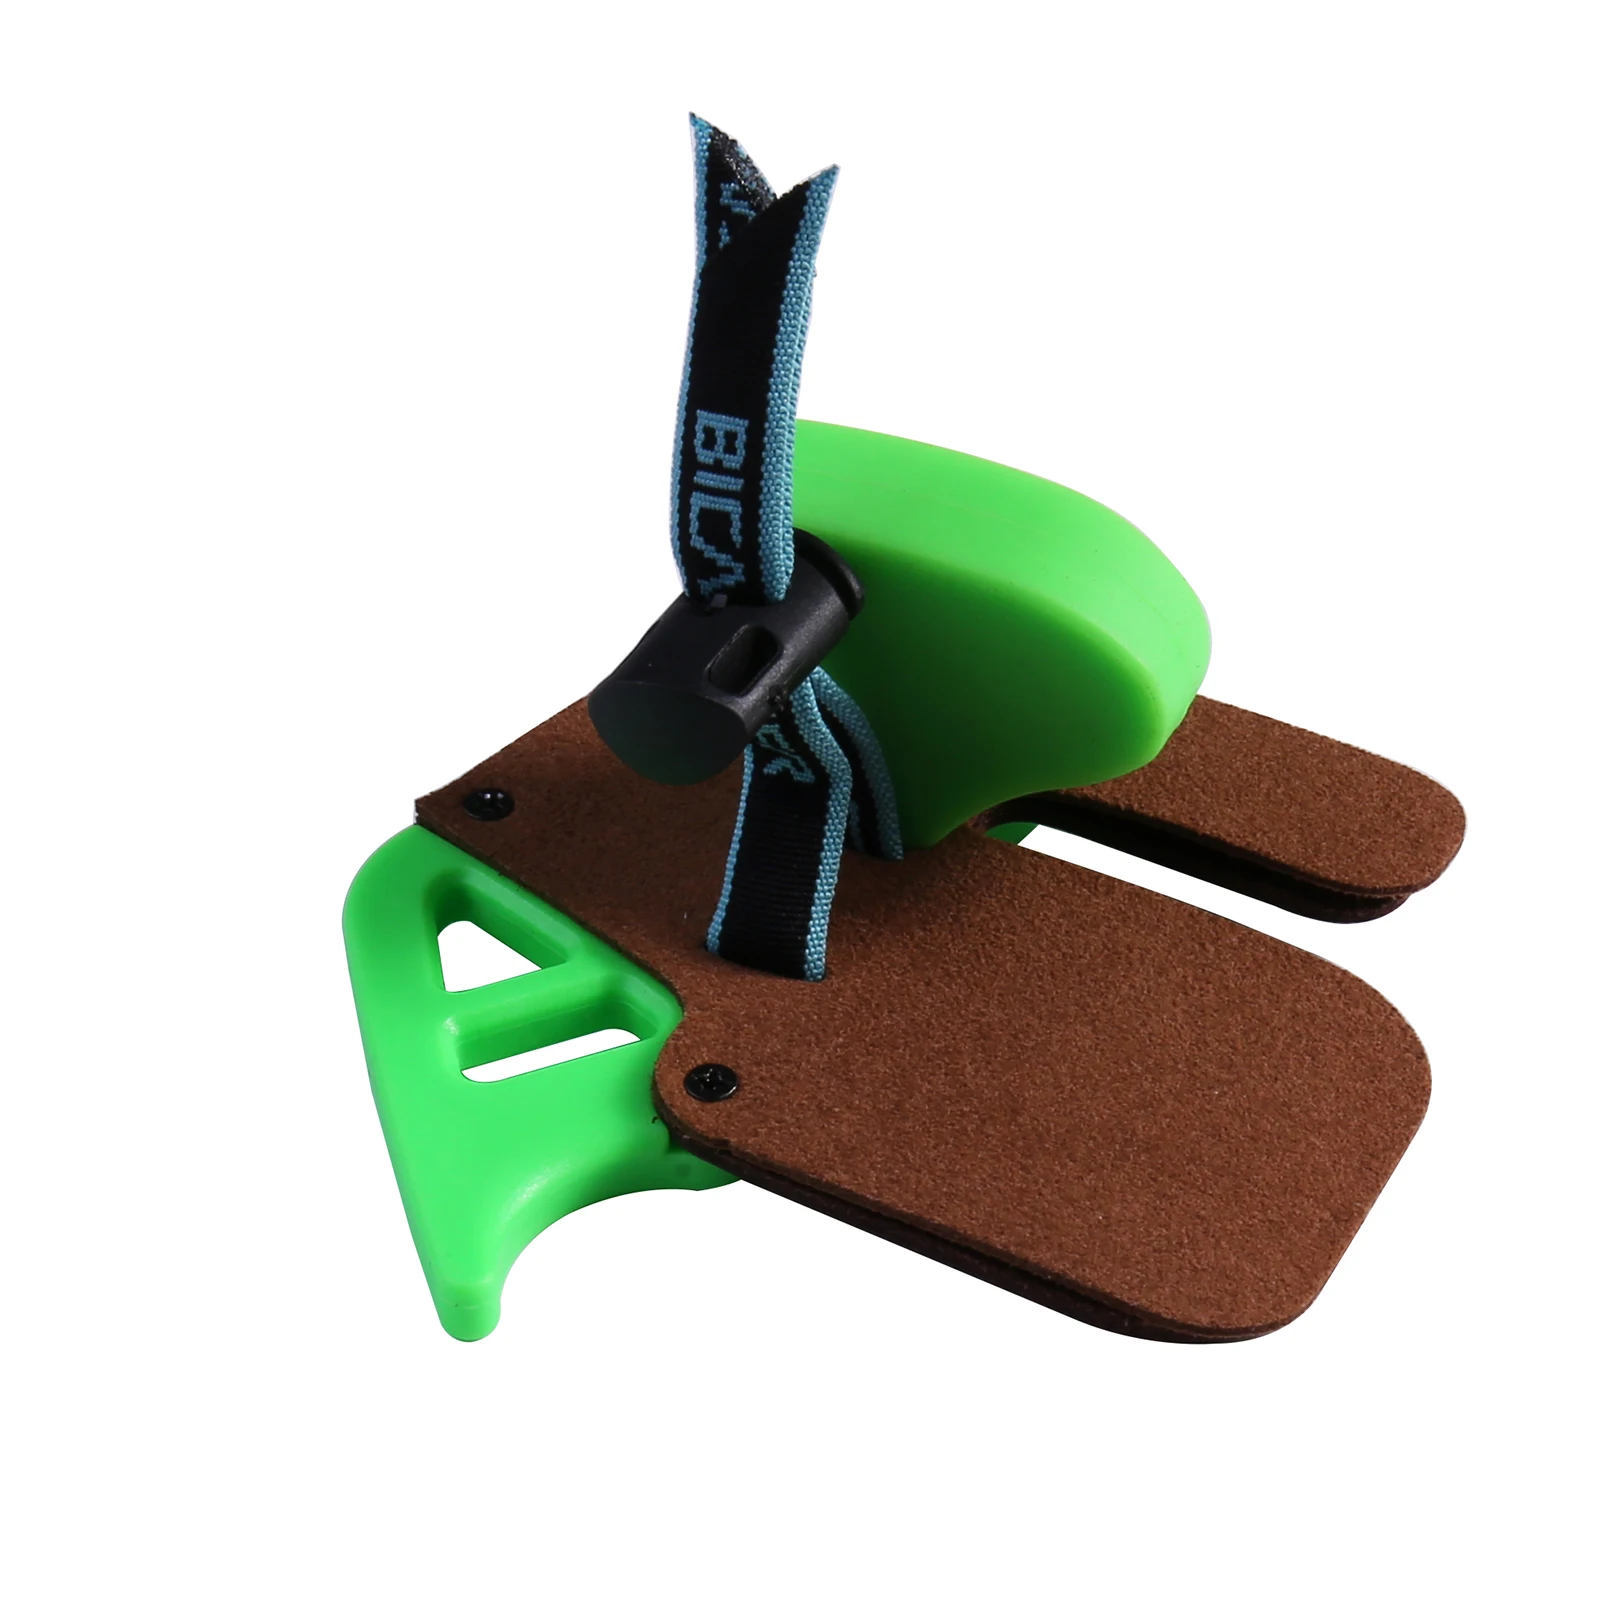 Bicaster Recurve Bow Finger Tabs XS/S/M/L Archery Finger Guard Genuine Leather